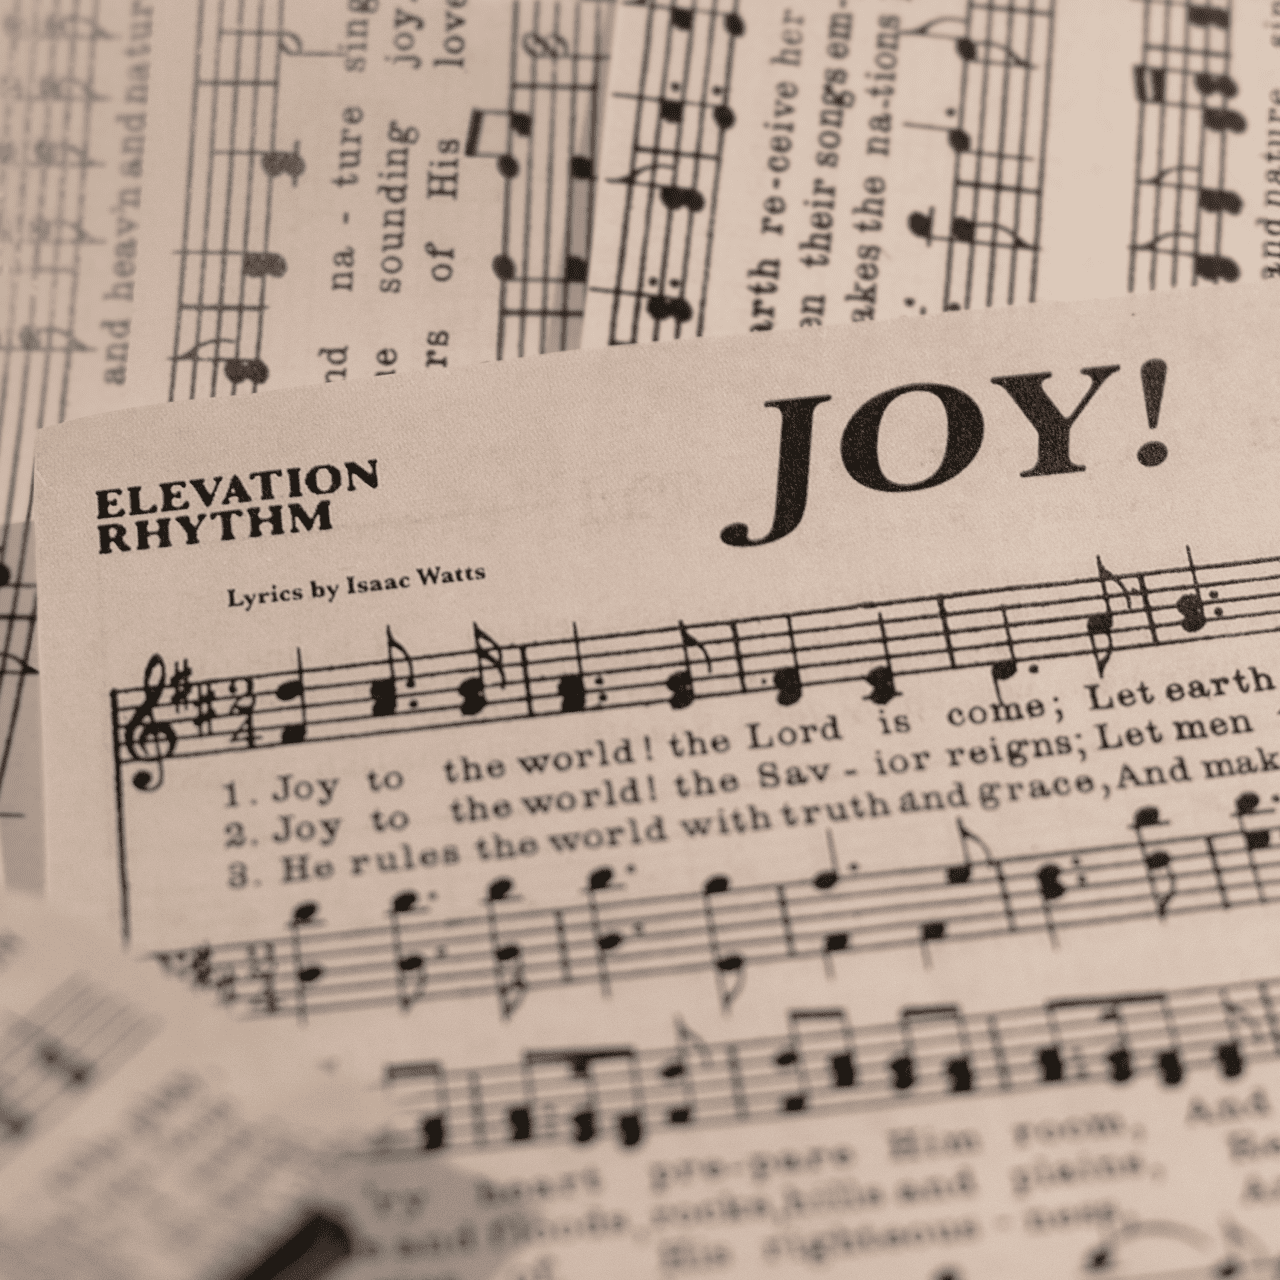 Elevation Rhythm "Joy!" Cover